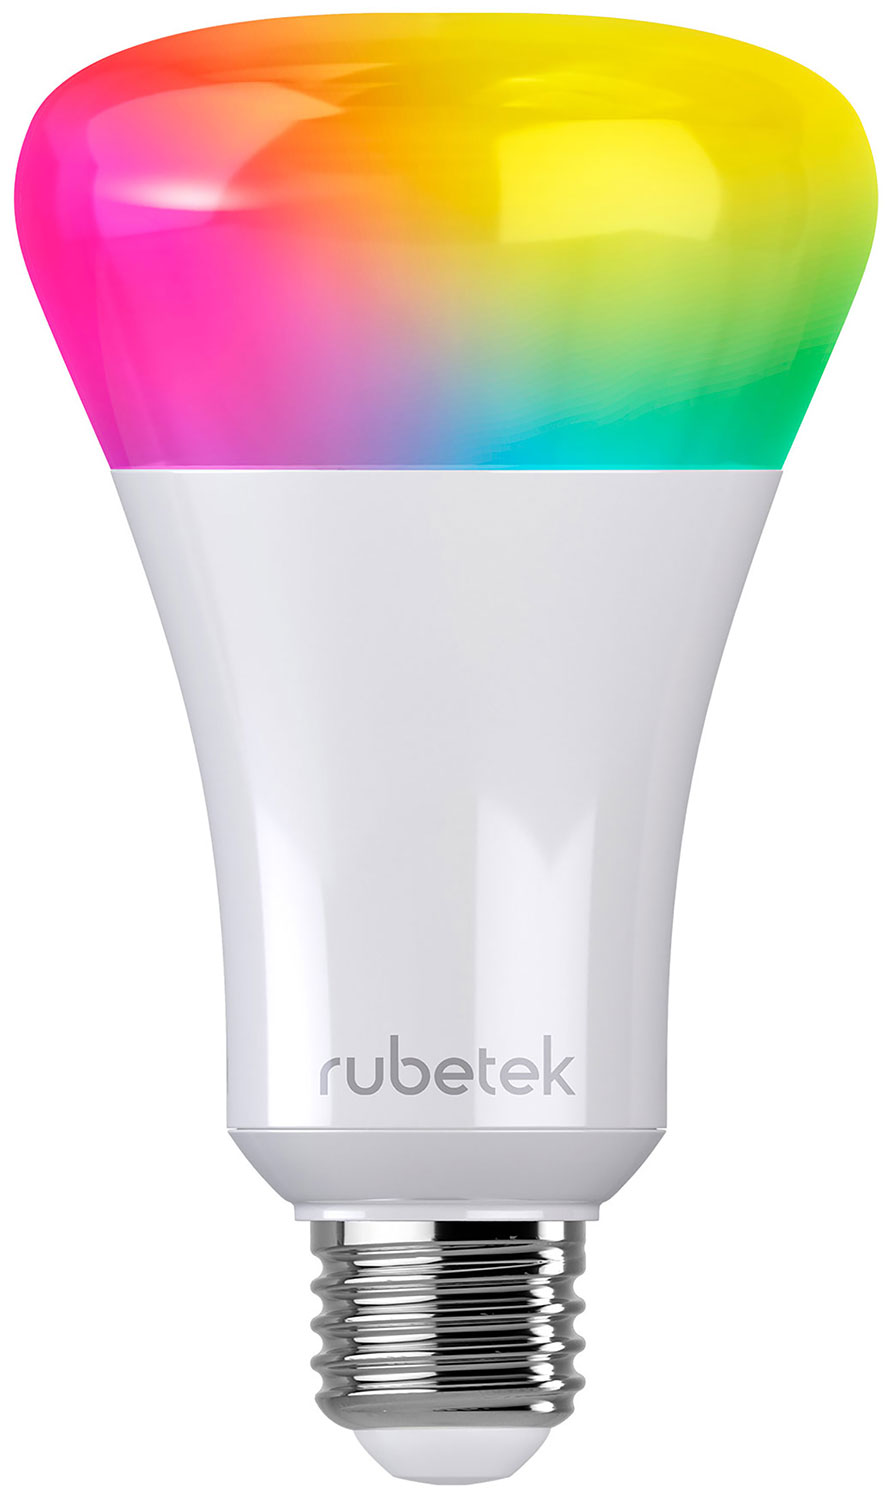 rubetek smart button rl 3337 Wi-Fi лампа Rubetek RL-3103